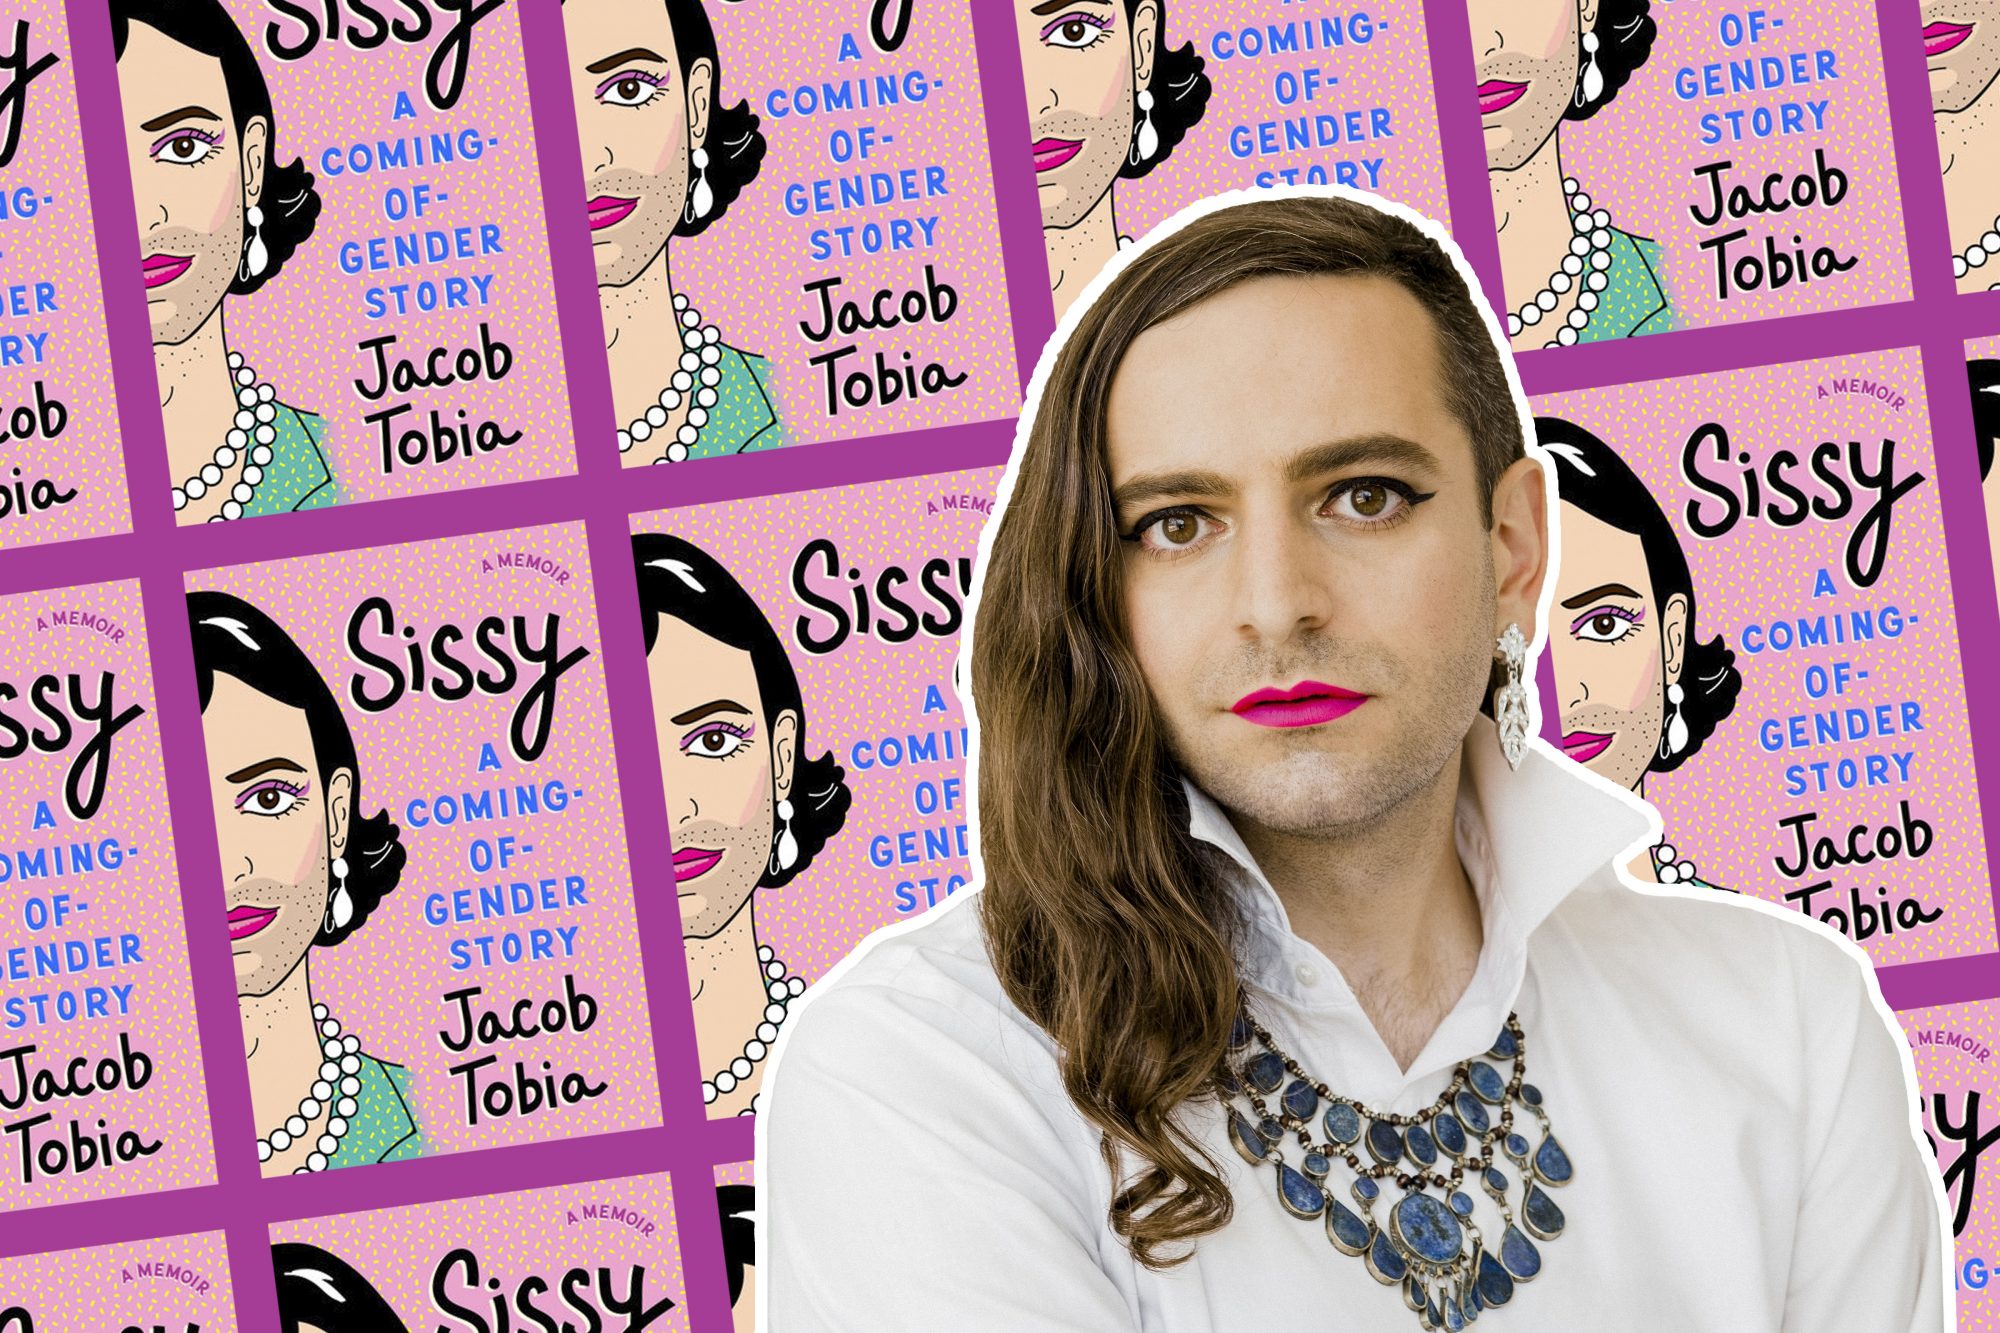 Interview: Sissy Author Jacob Tobia Talks GenderHelloGiggles